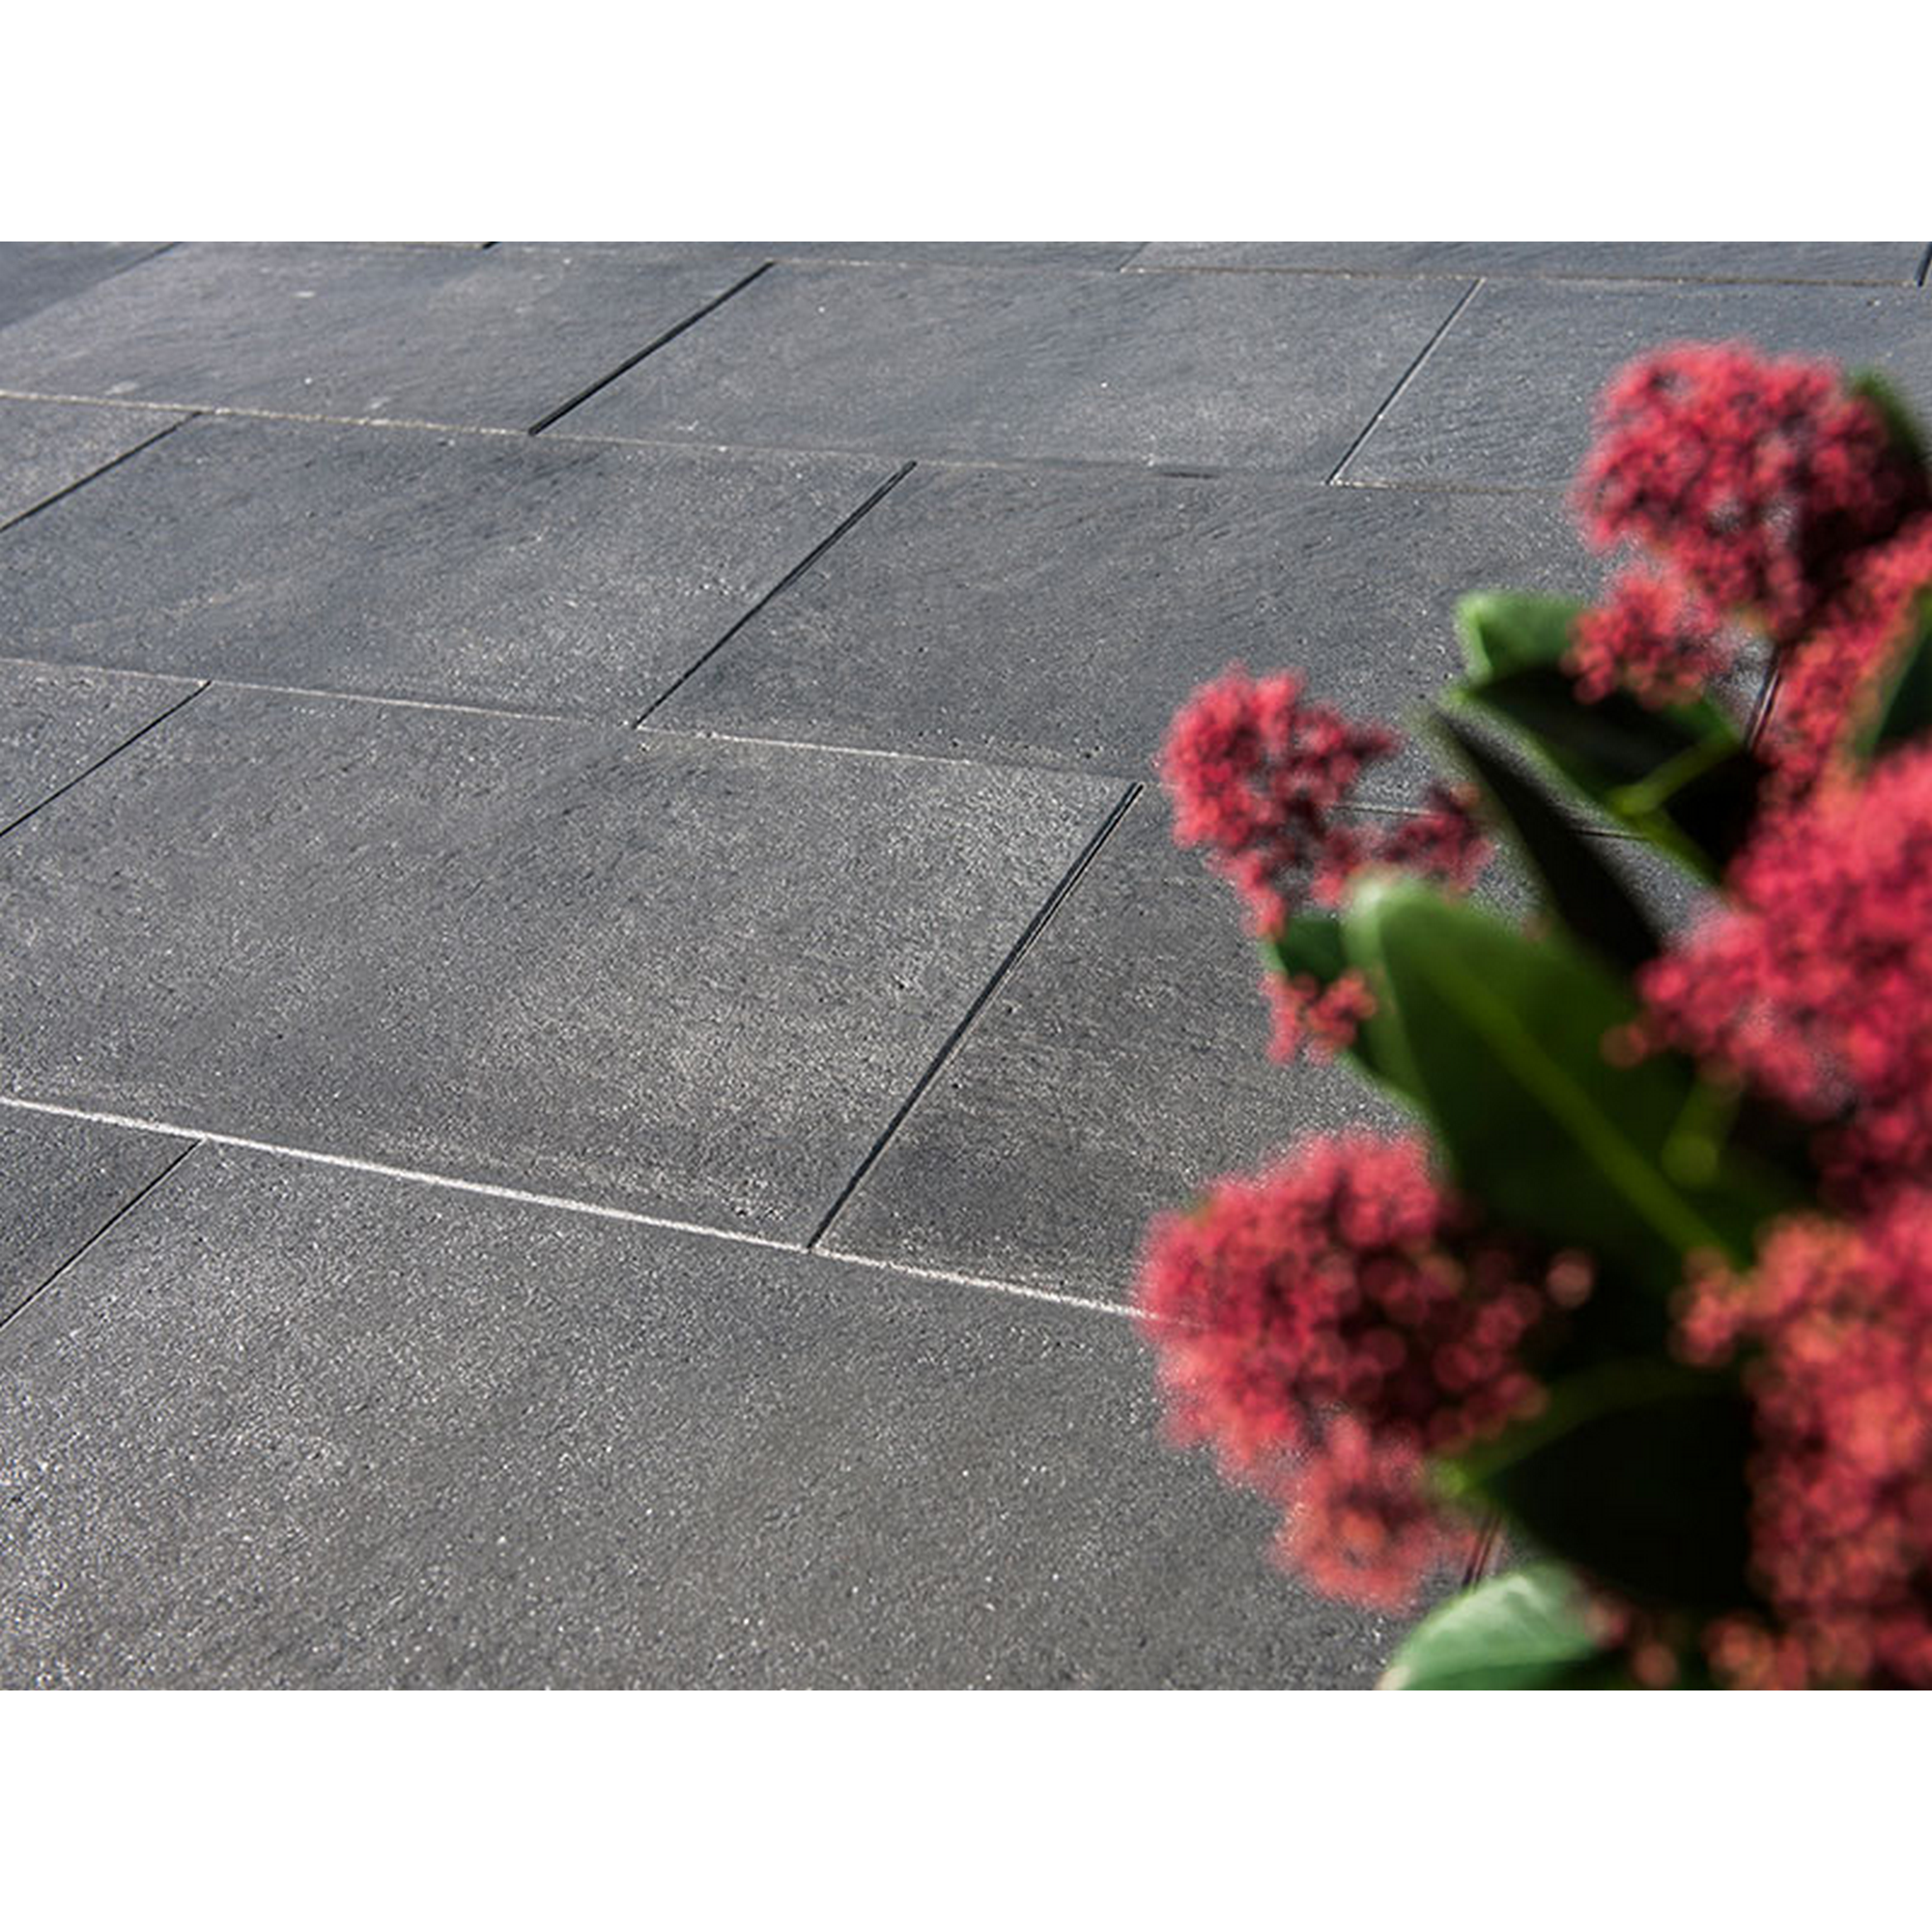 Terrassenplatte 'T-Court Noble' Beton schwarz-basalt 60 x 40 x 4 cm + product picture